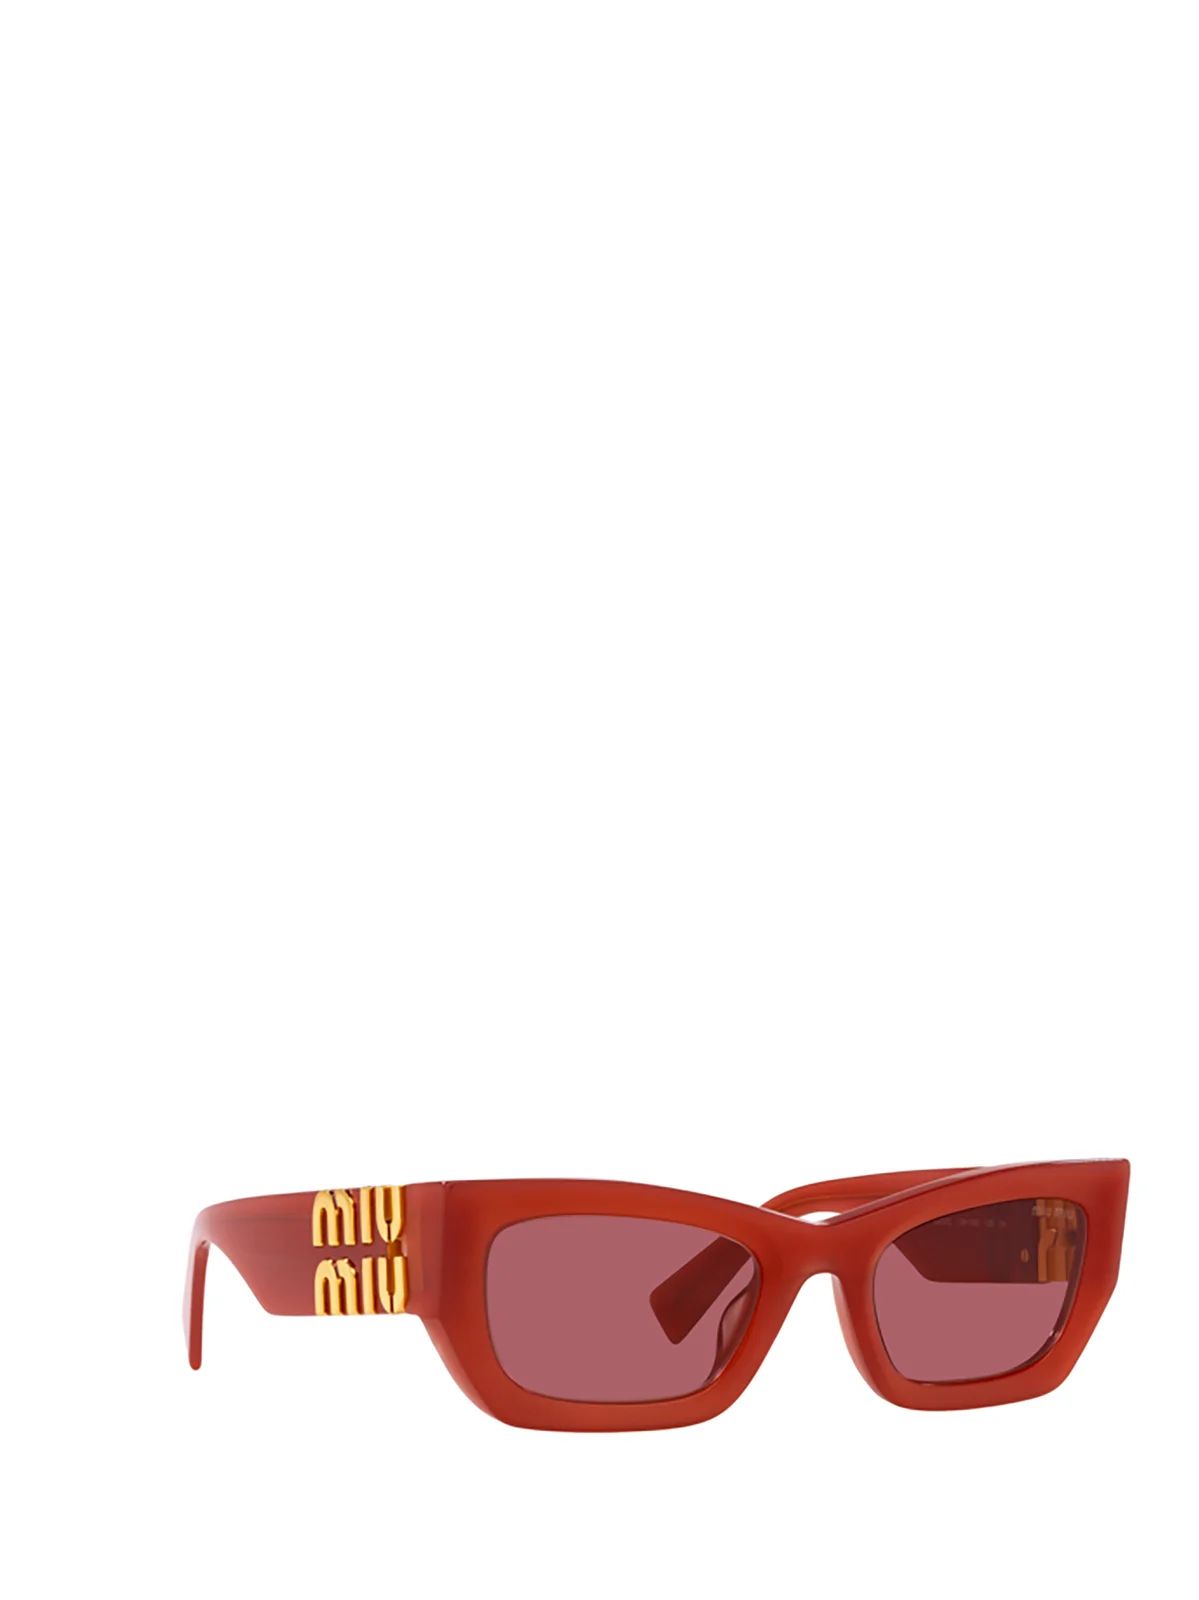 Miu Miu Eyewear Rectangular Frame Sunglasses | Cettire Global